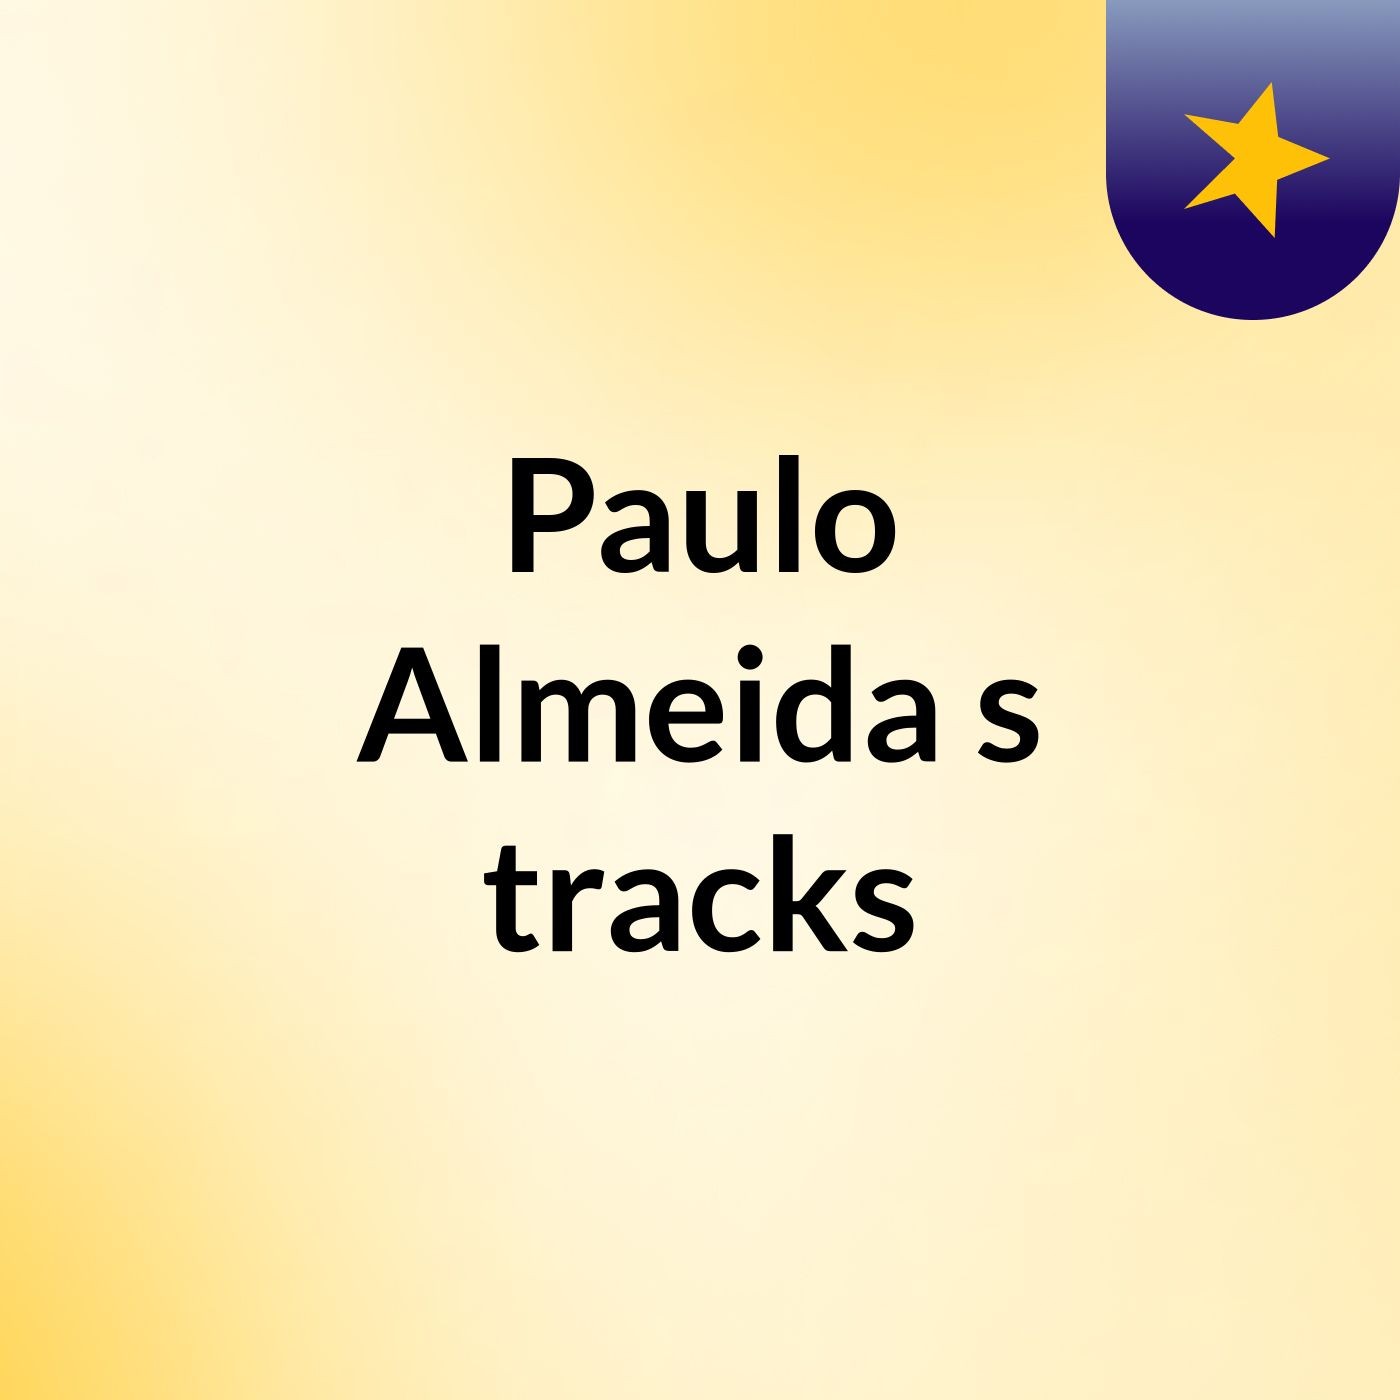 Paulo Almeida's tracks